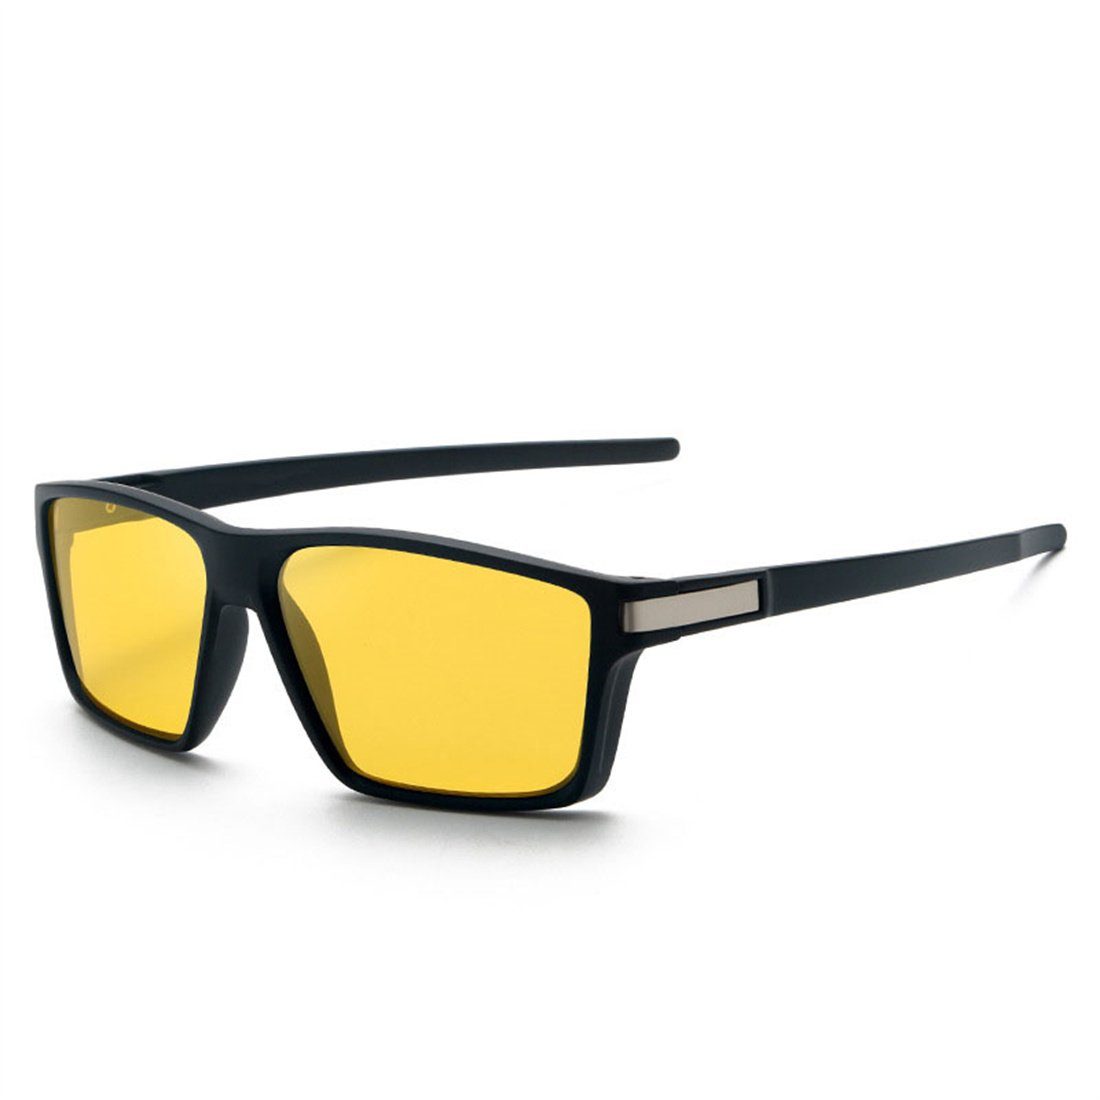 DÖRÖY Sonnenbrille Herrenmode Polarisierte Sonnenbrille, Outdoor-Reitbrille Sonnenbrille | Sonnenbrillen